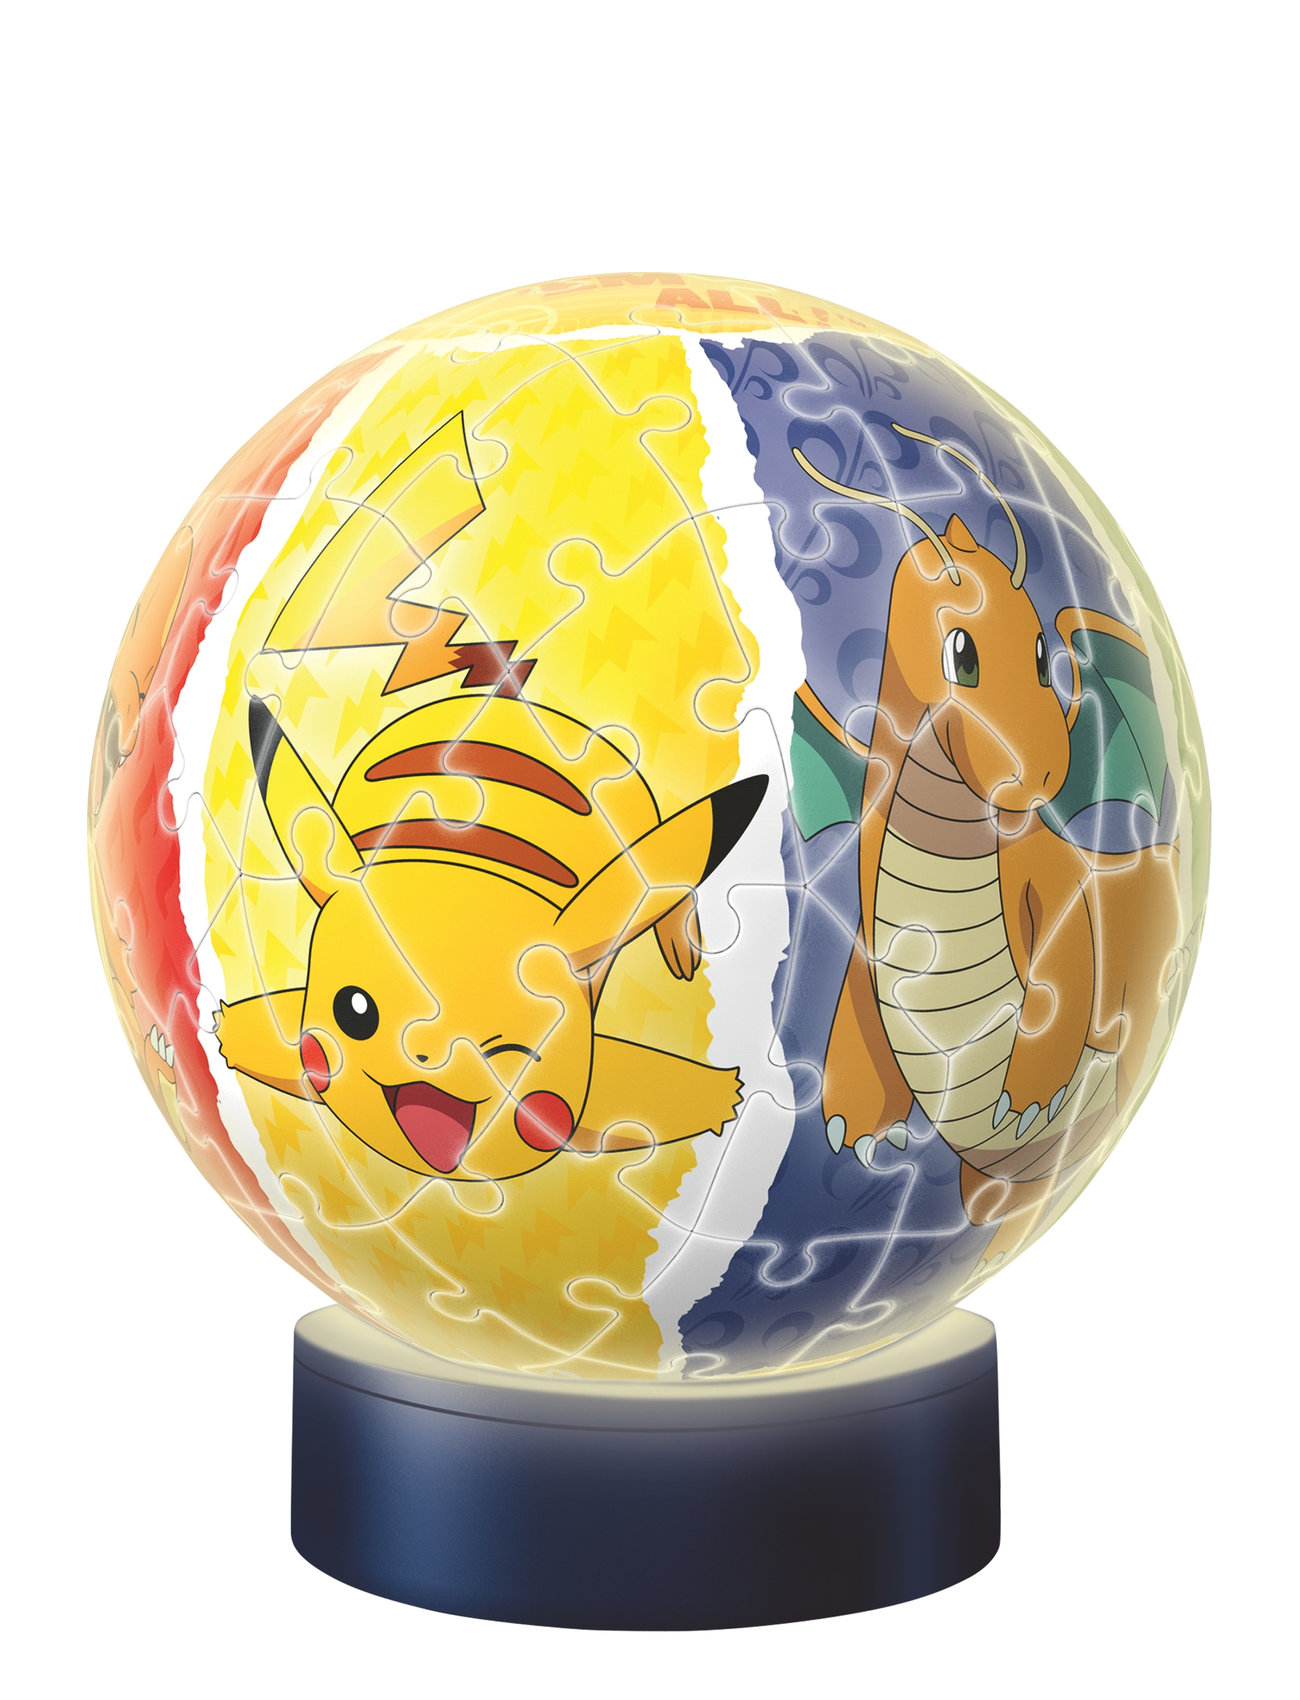 Pokémon Night Light 72P Toys Puzzles And Games Puzzles 3d Puzzles Multi/patterned Ravensburger